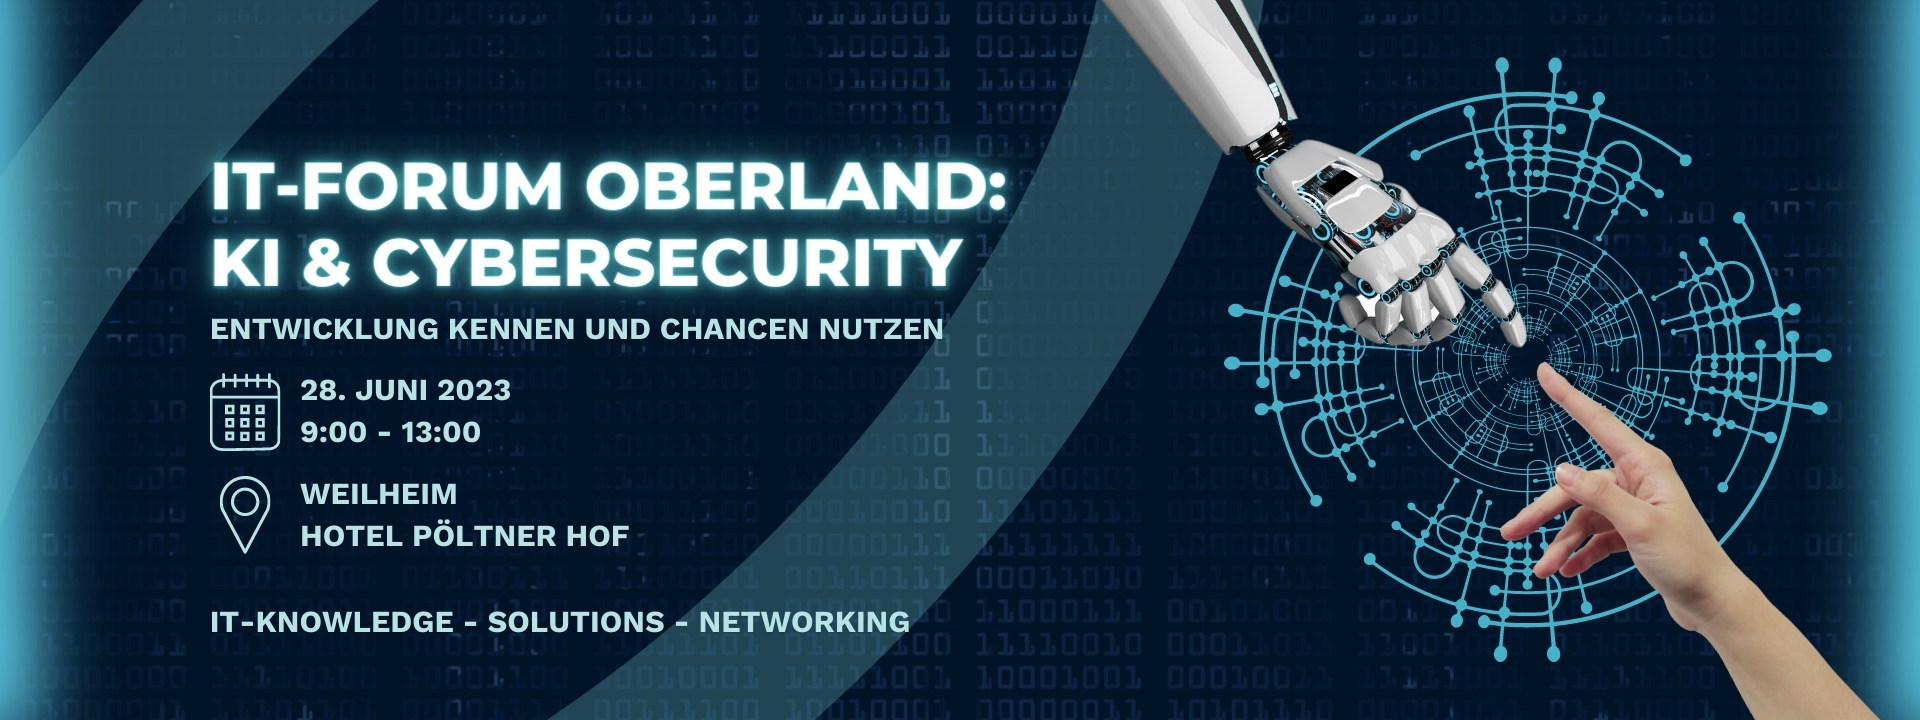 IT-Forum Oberland: KI & Cybersecurity